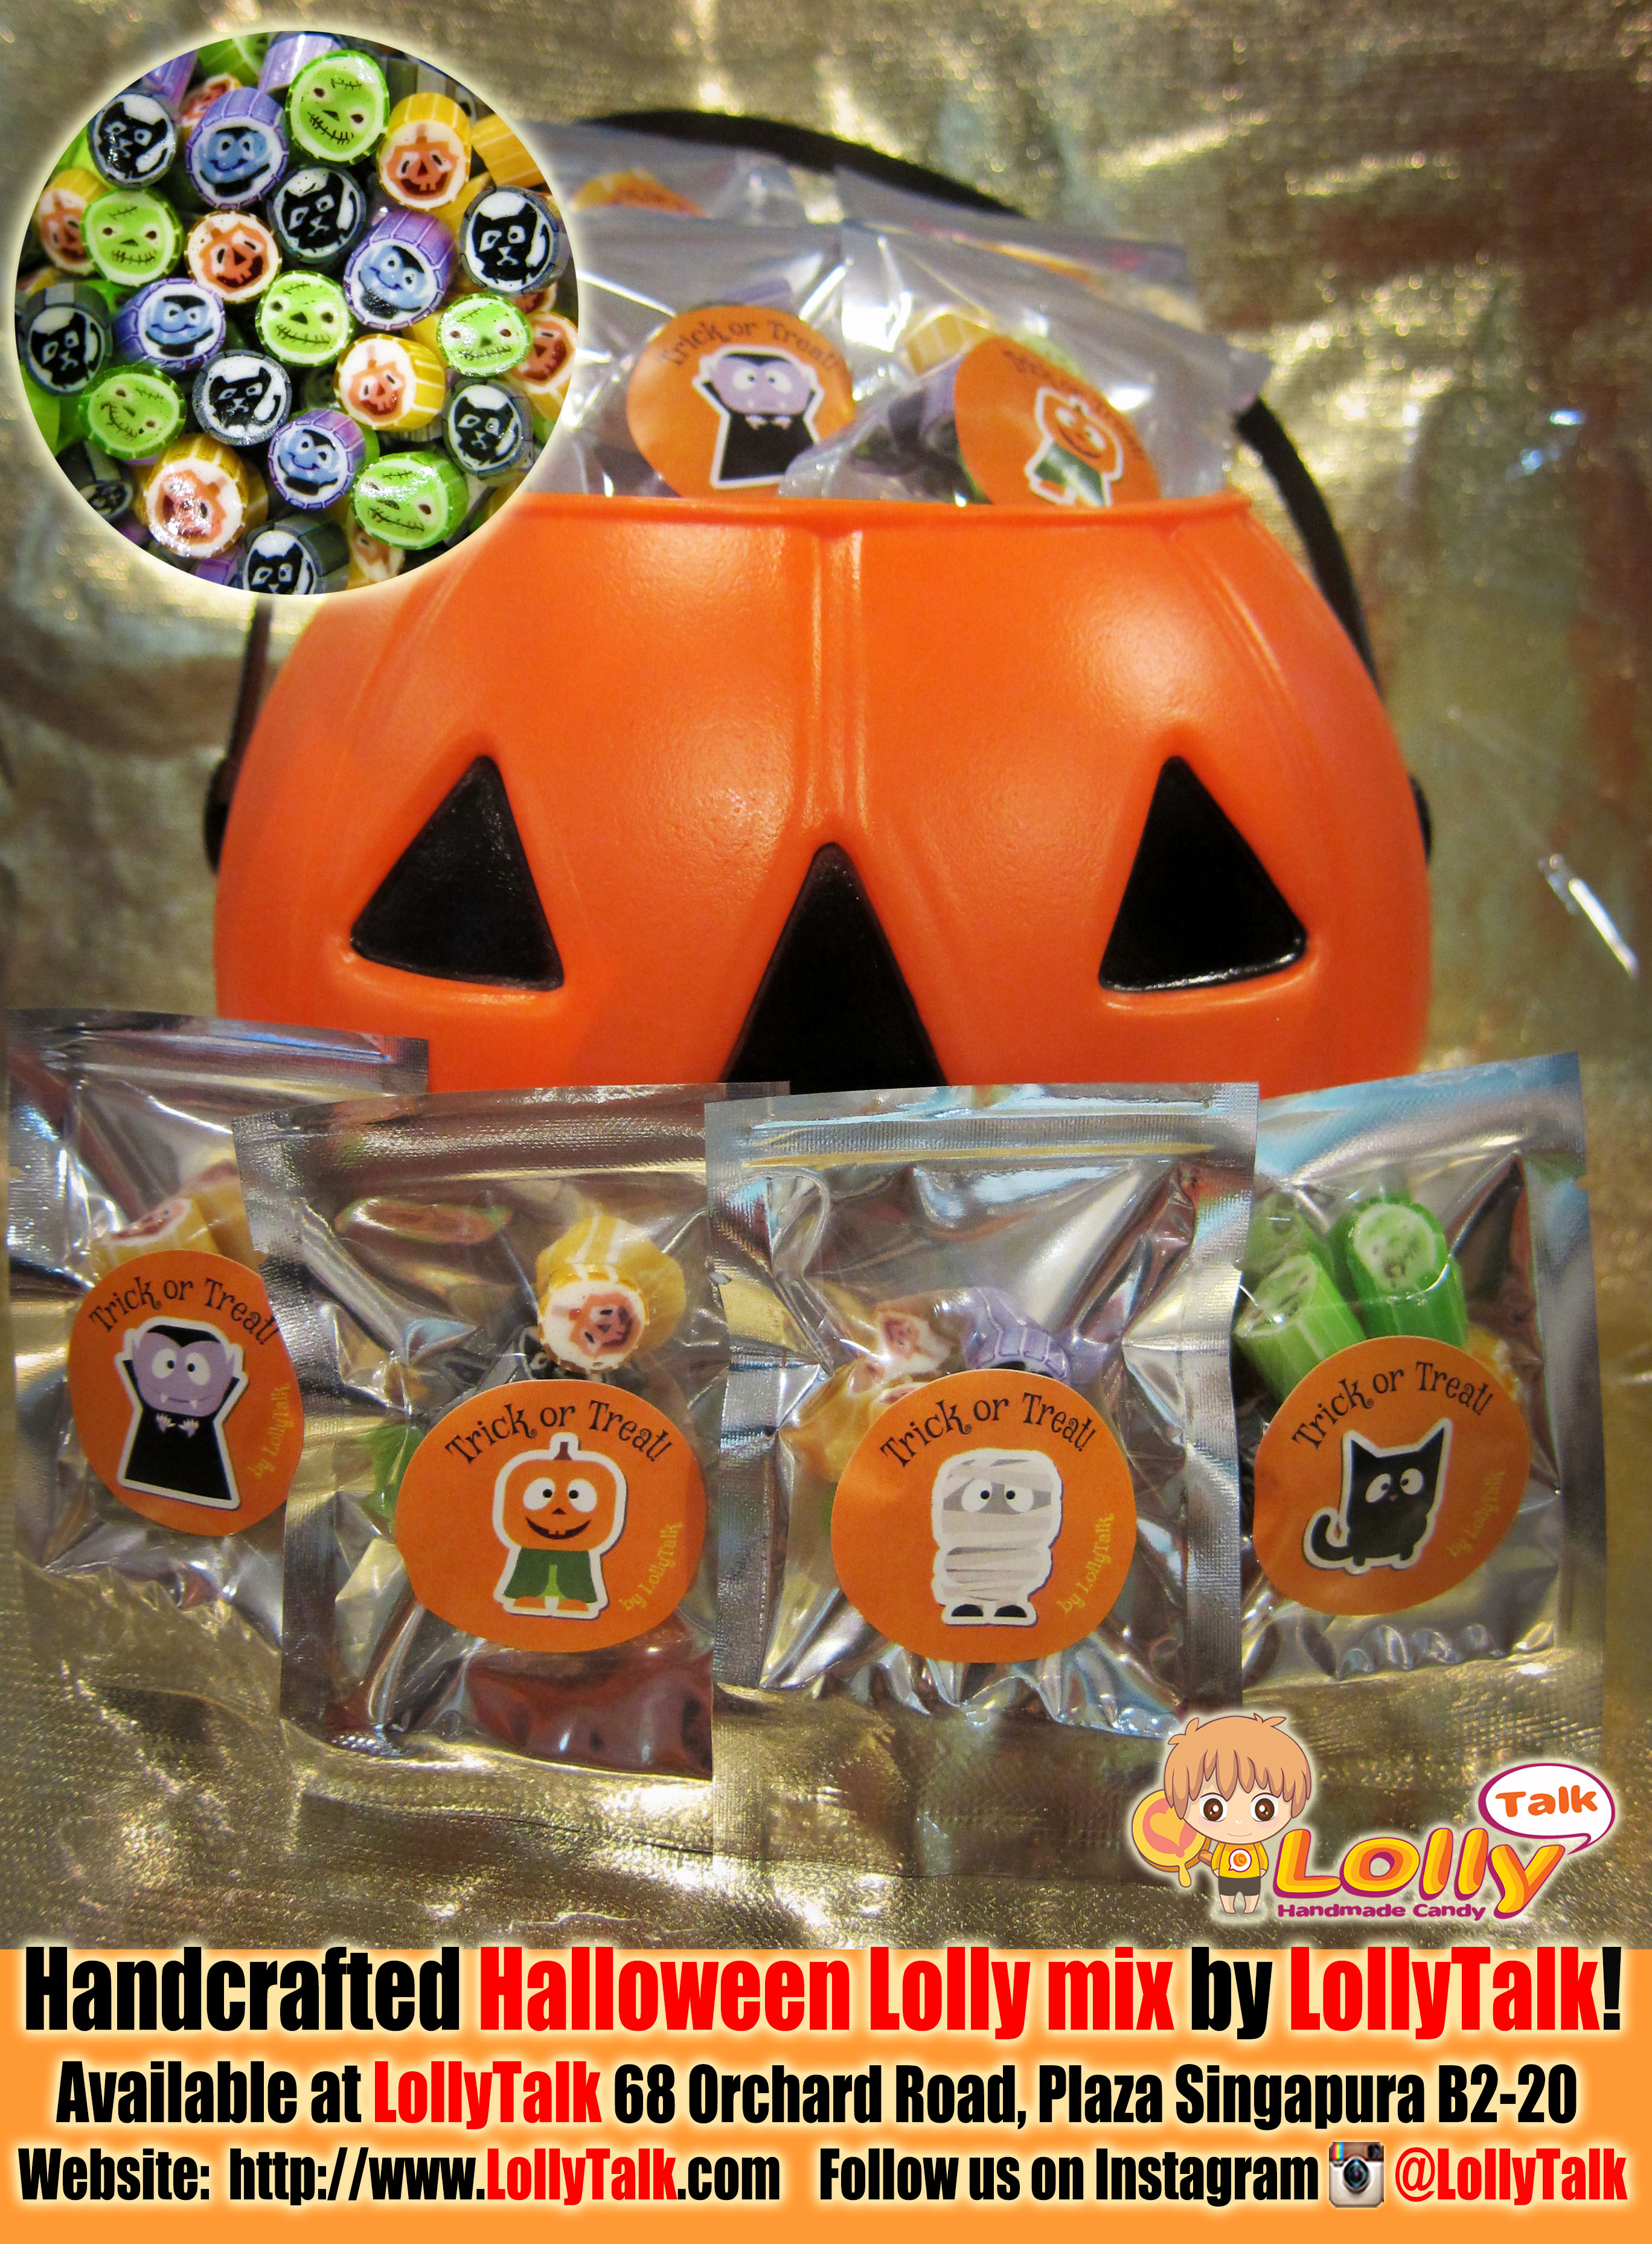 LollyTalk Halloween Pumpkin full of Super mini packs